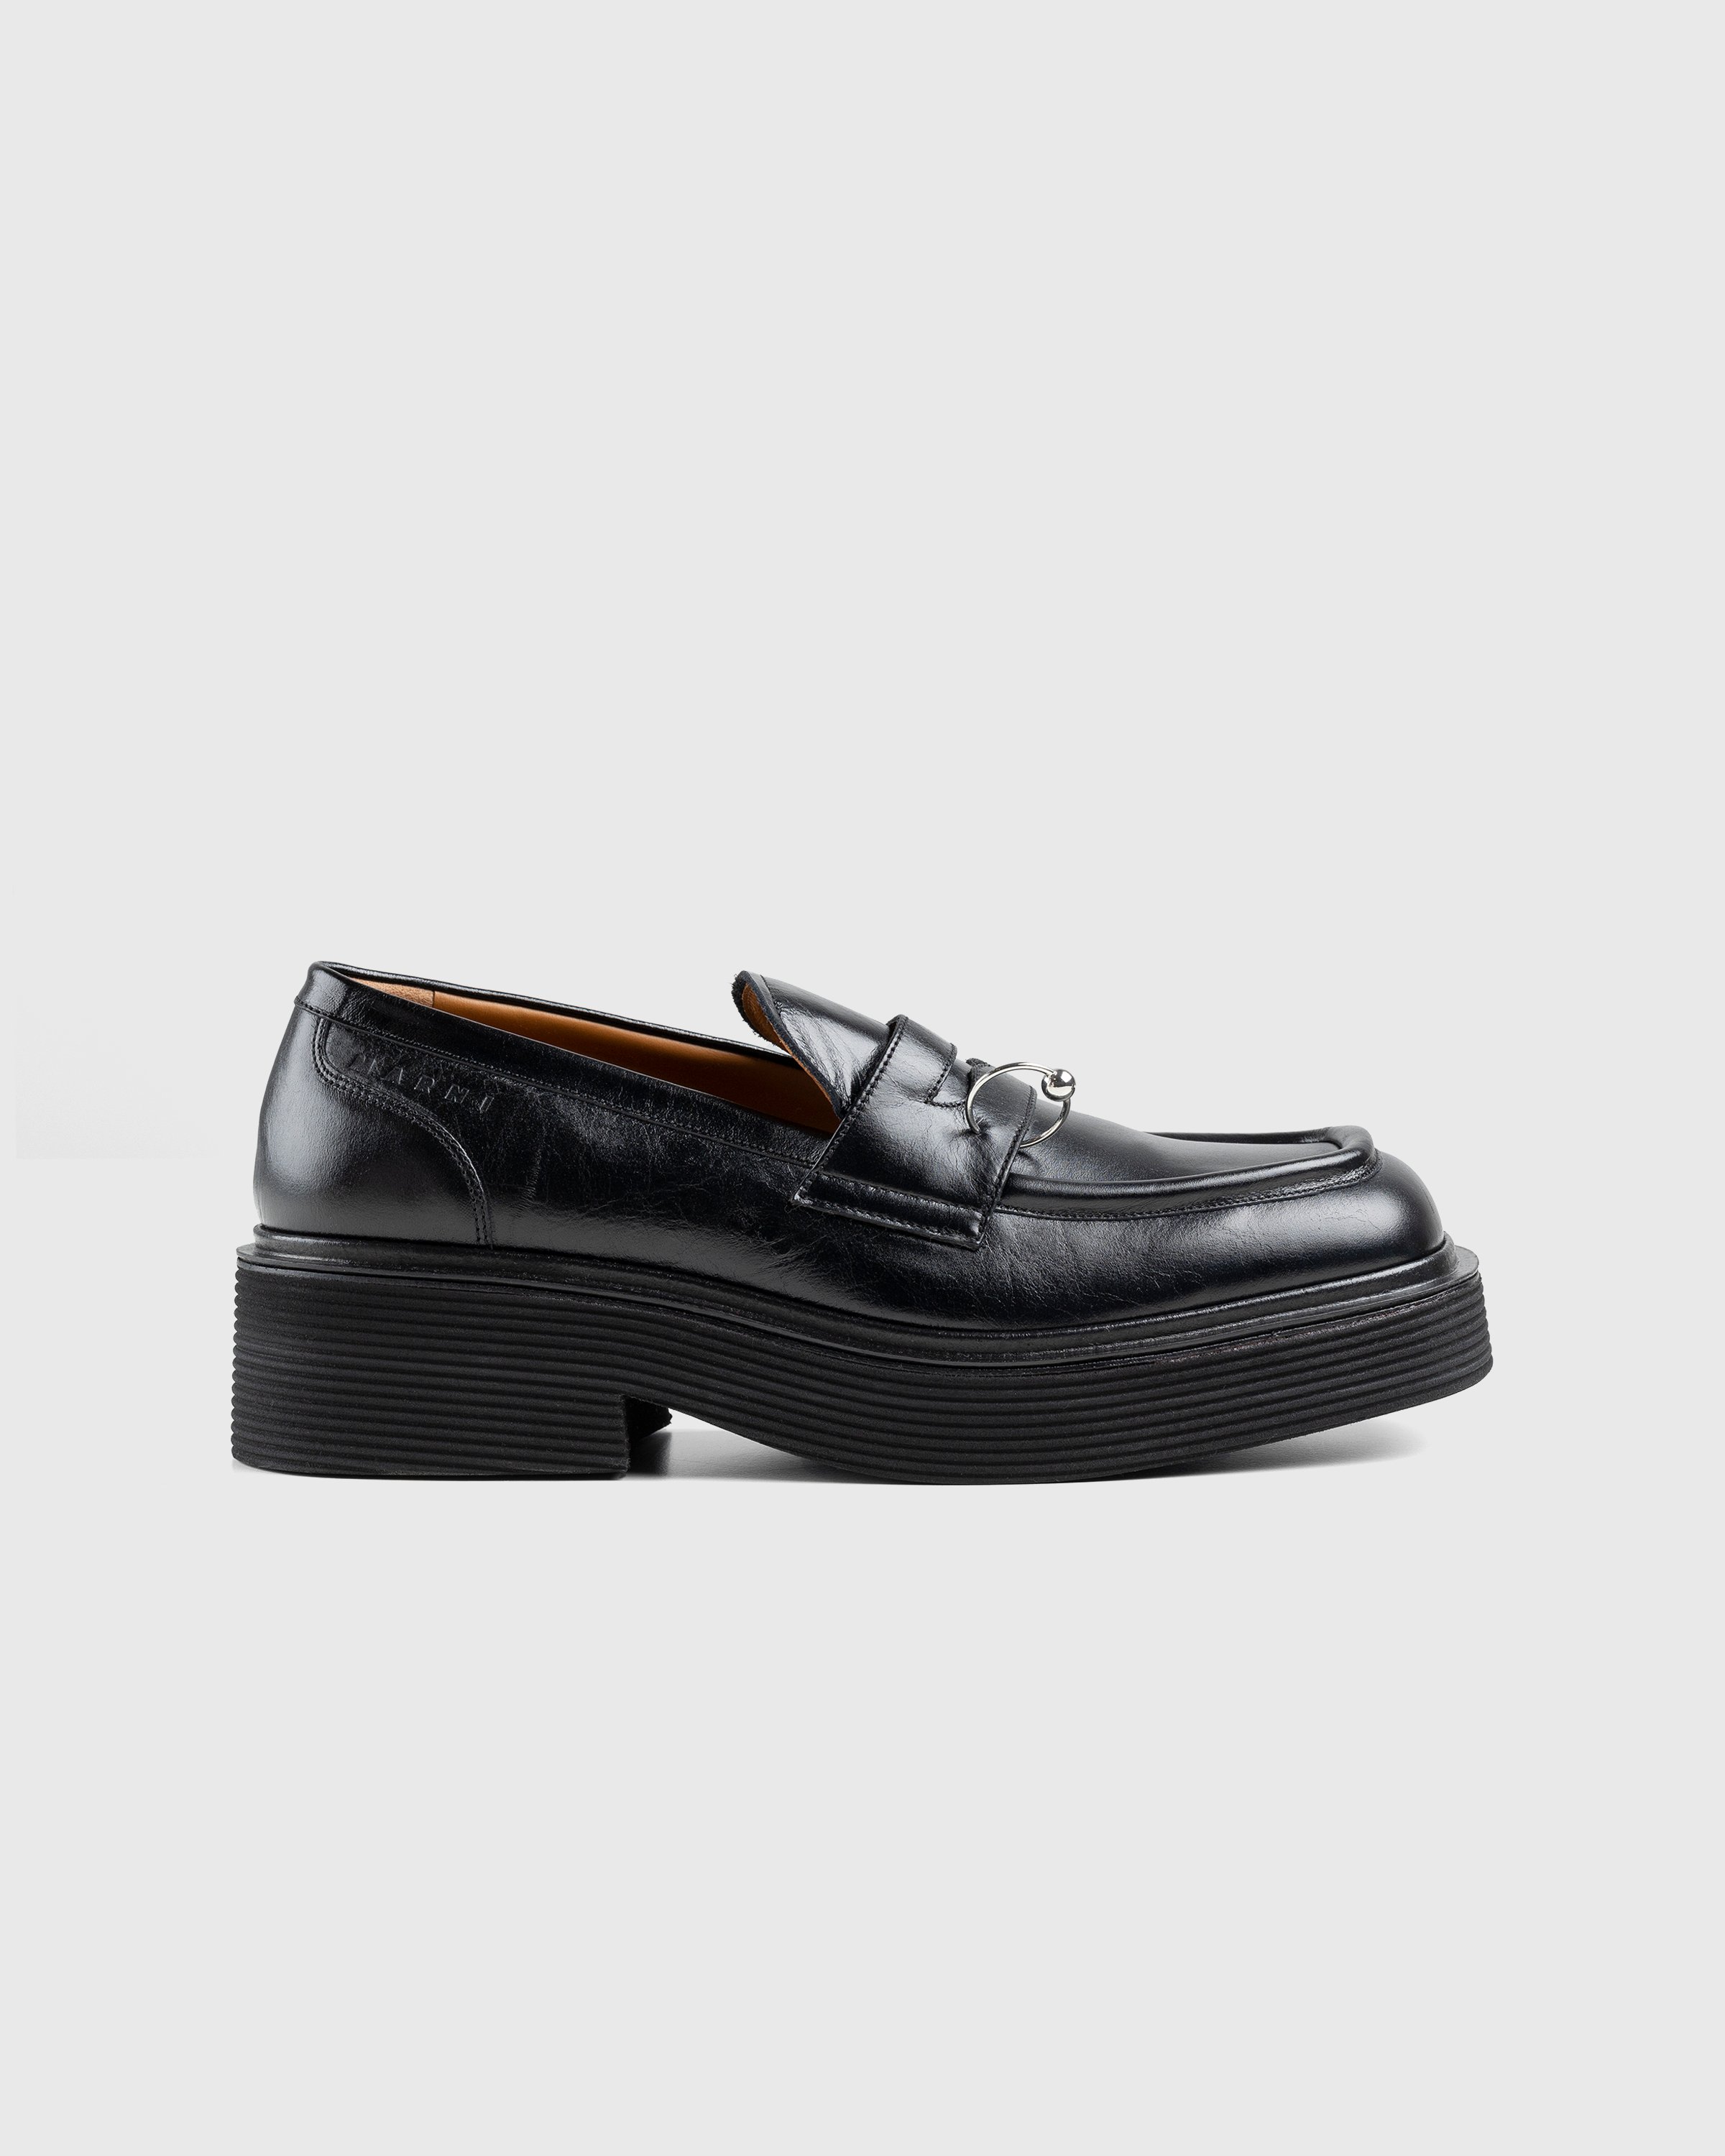 Marni - Shiny Leather Moccasin Black - Footwear - Black - Image 1